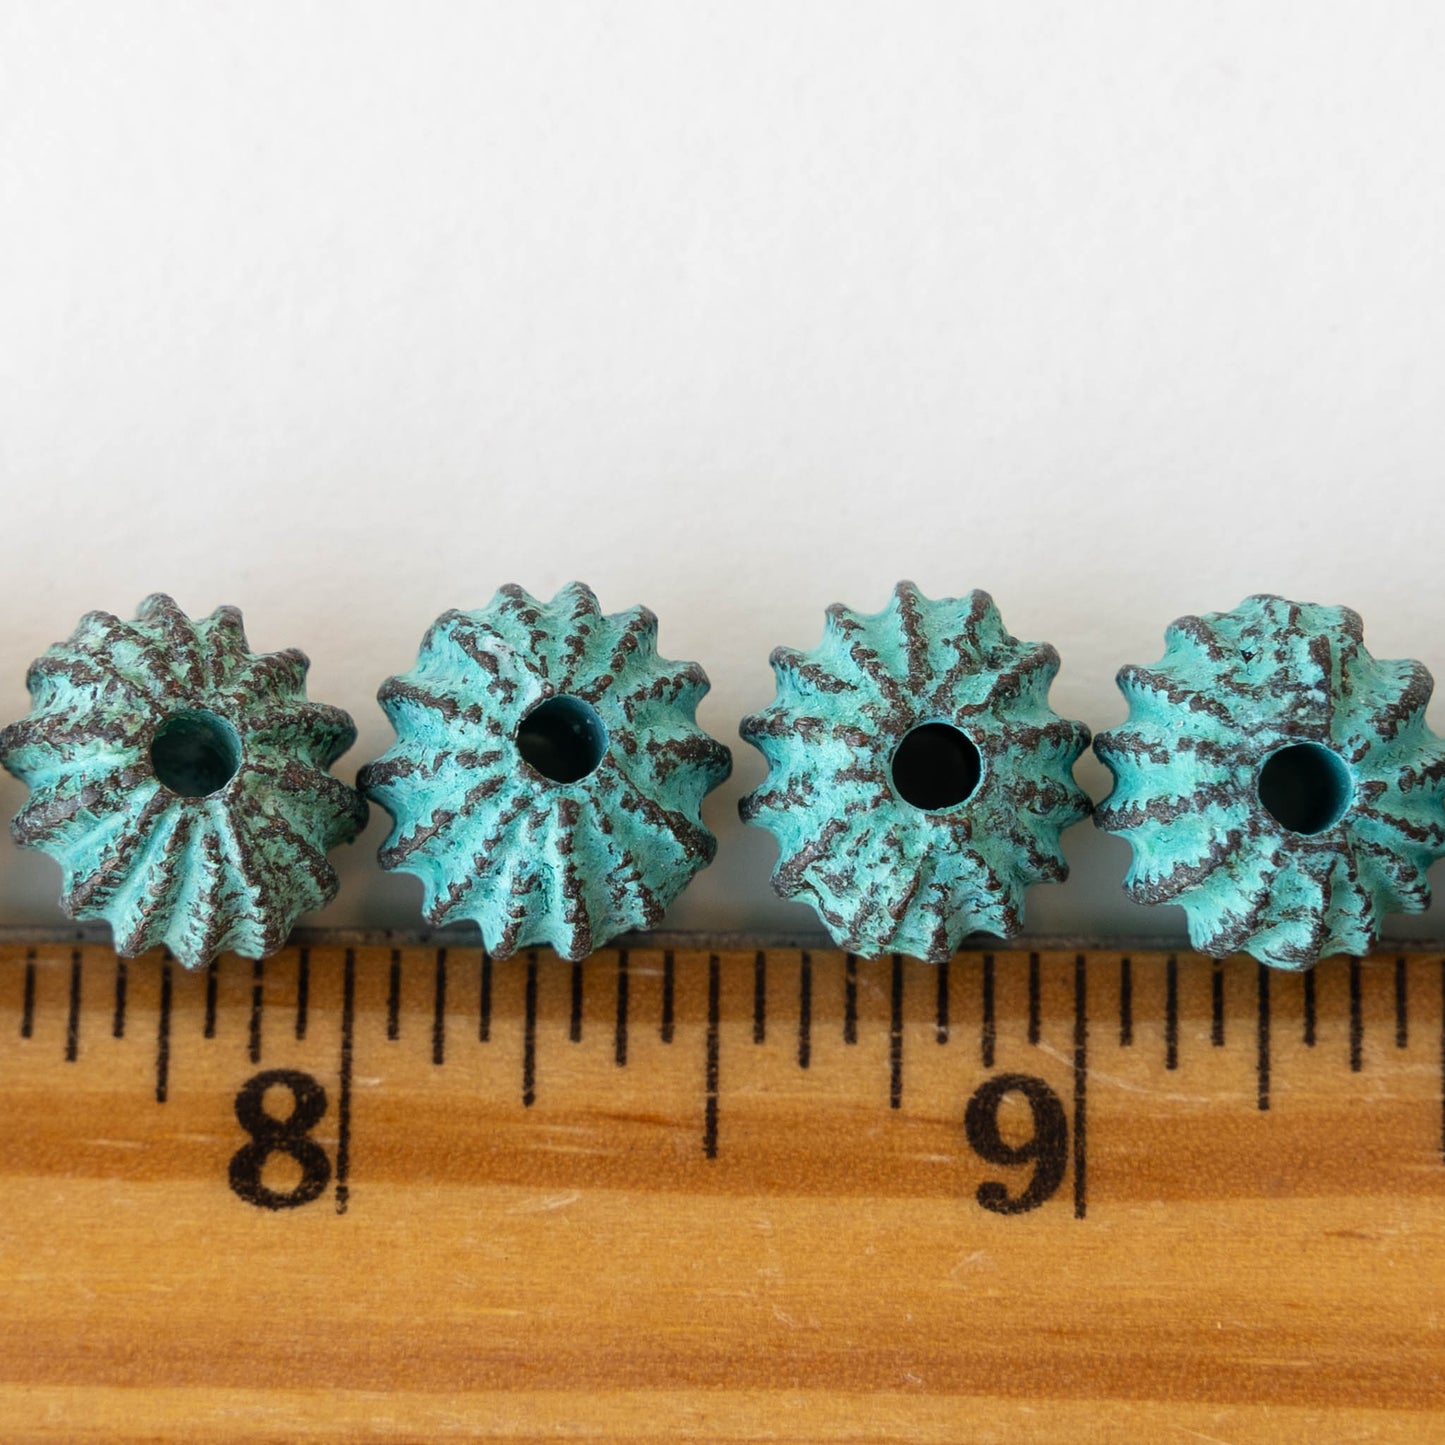 11x13mm Mykonos Metal Sea Urchin Beads - Green Patina - Choose Amount